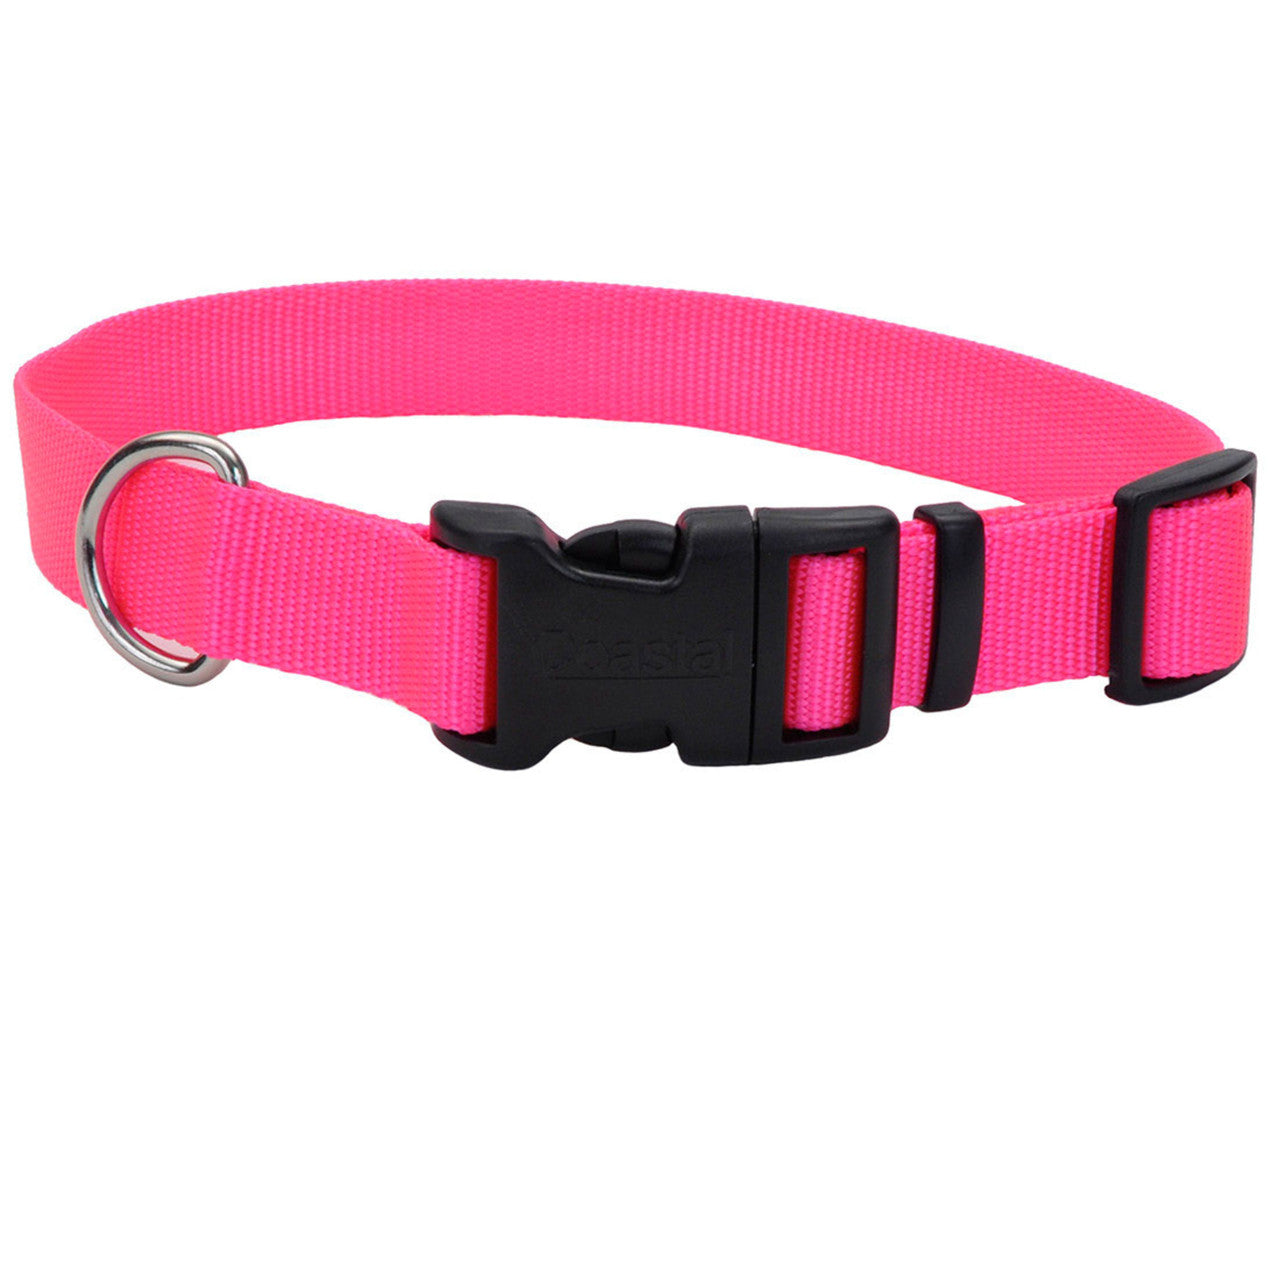 Coastal Adjustable Nylon Dog Collar with Plastic Buckle Neon Pink 3/4 in x 14-20 in